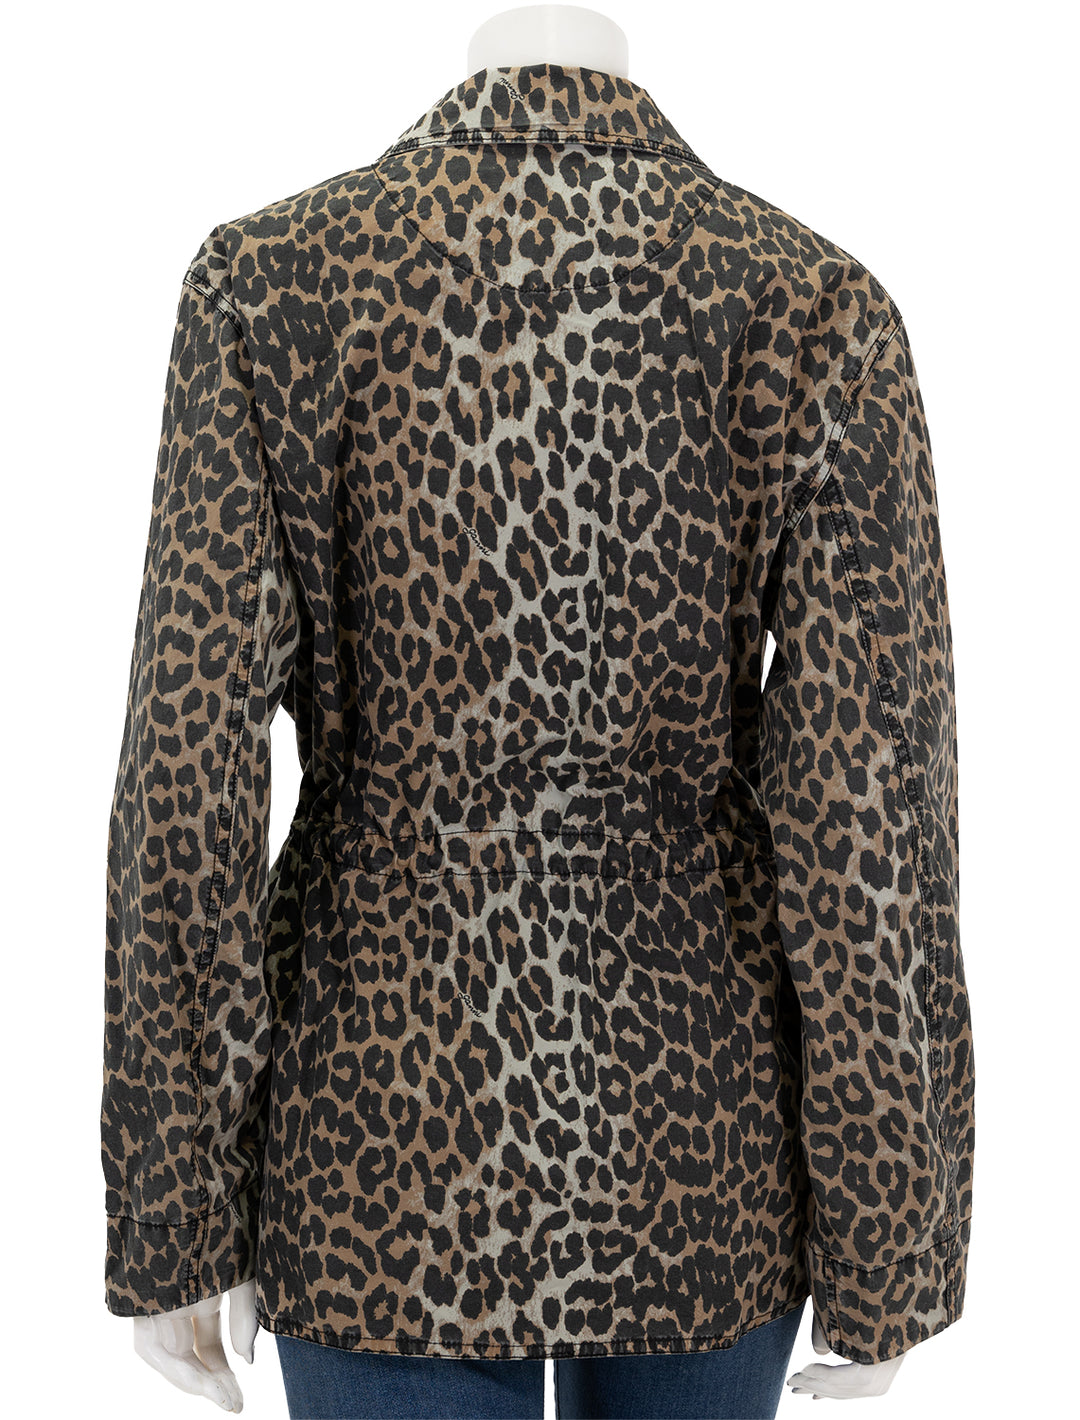 Back view of GANNI's cotton canvas jacket in almond milk leopard.